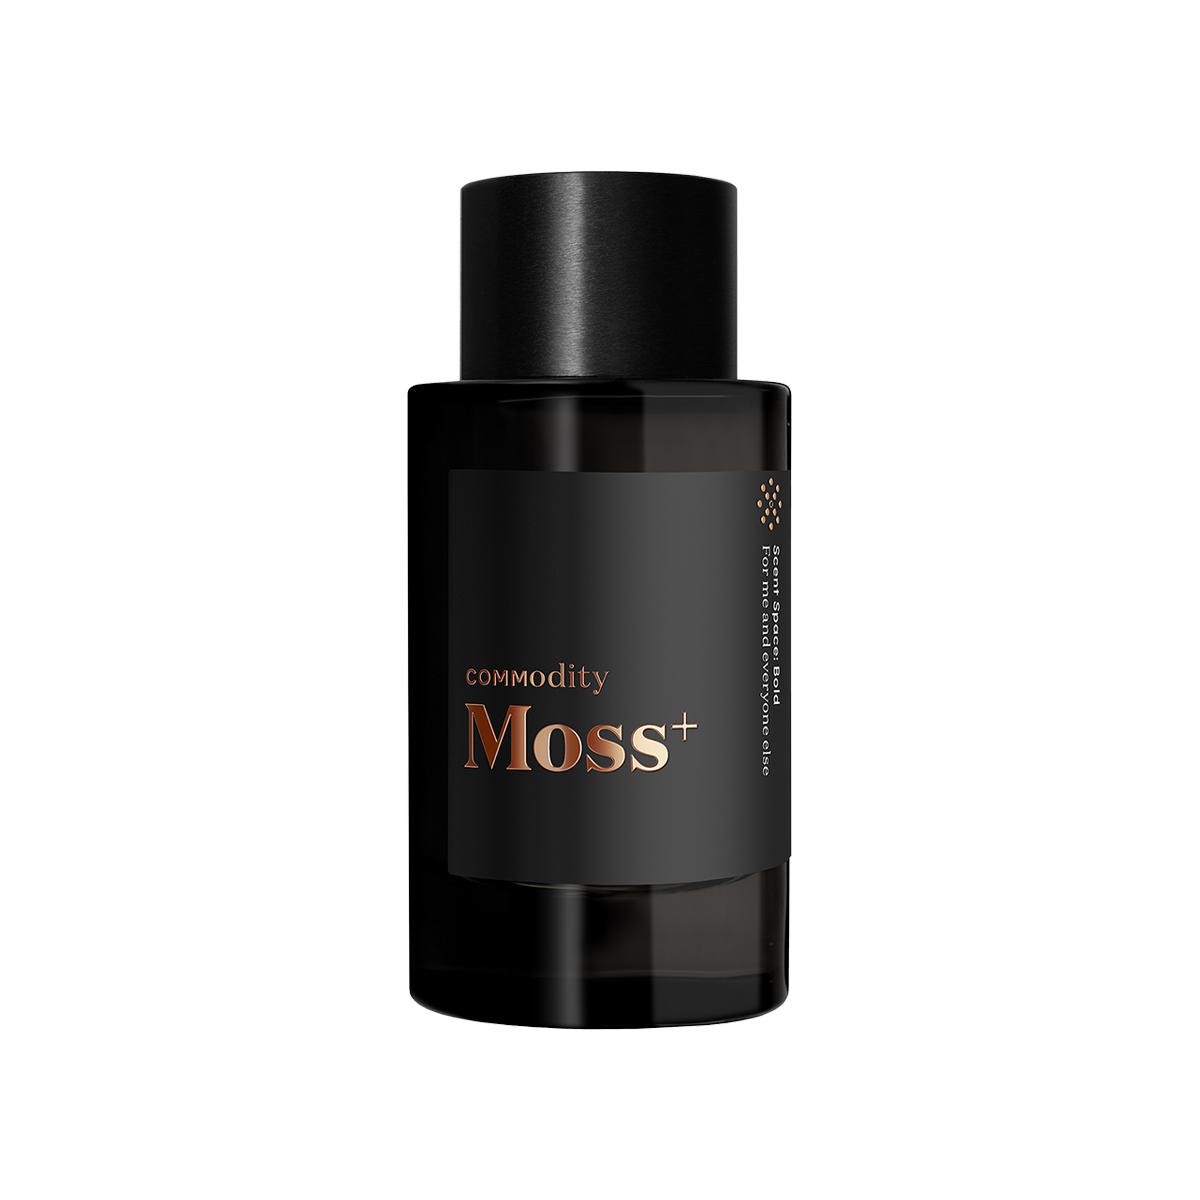 Commodity - Moss+ Bold